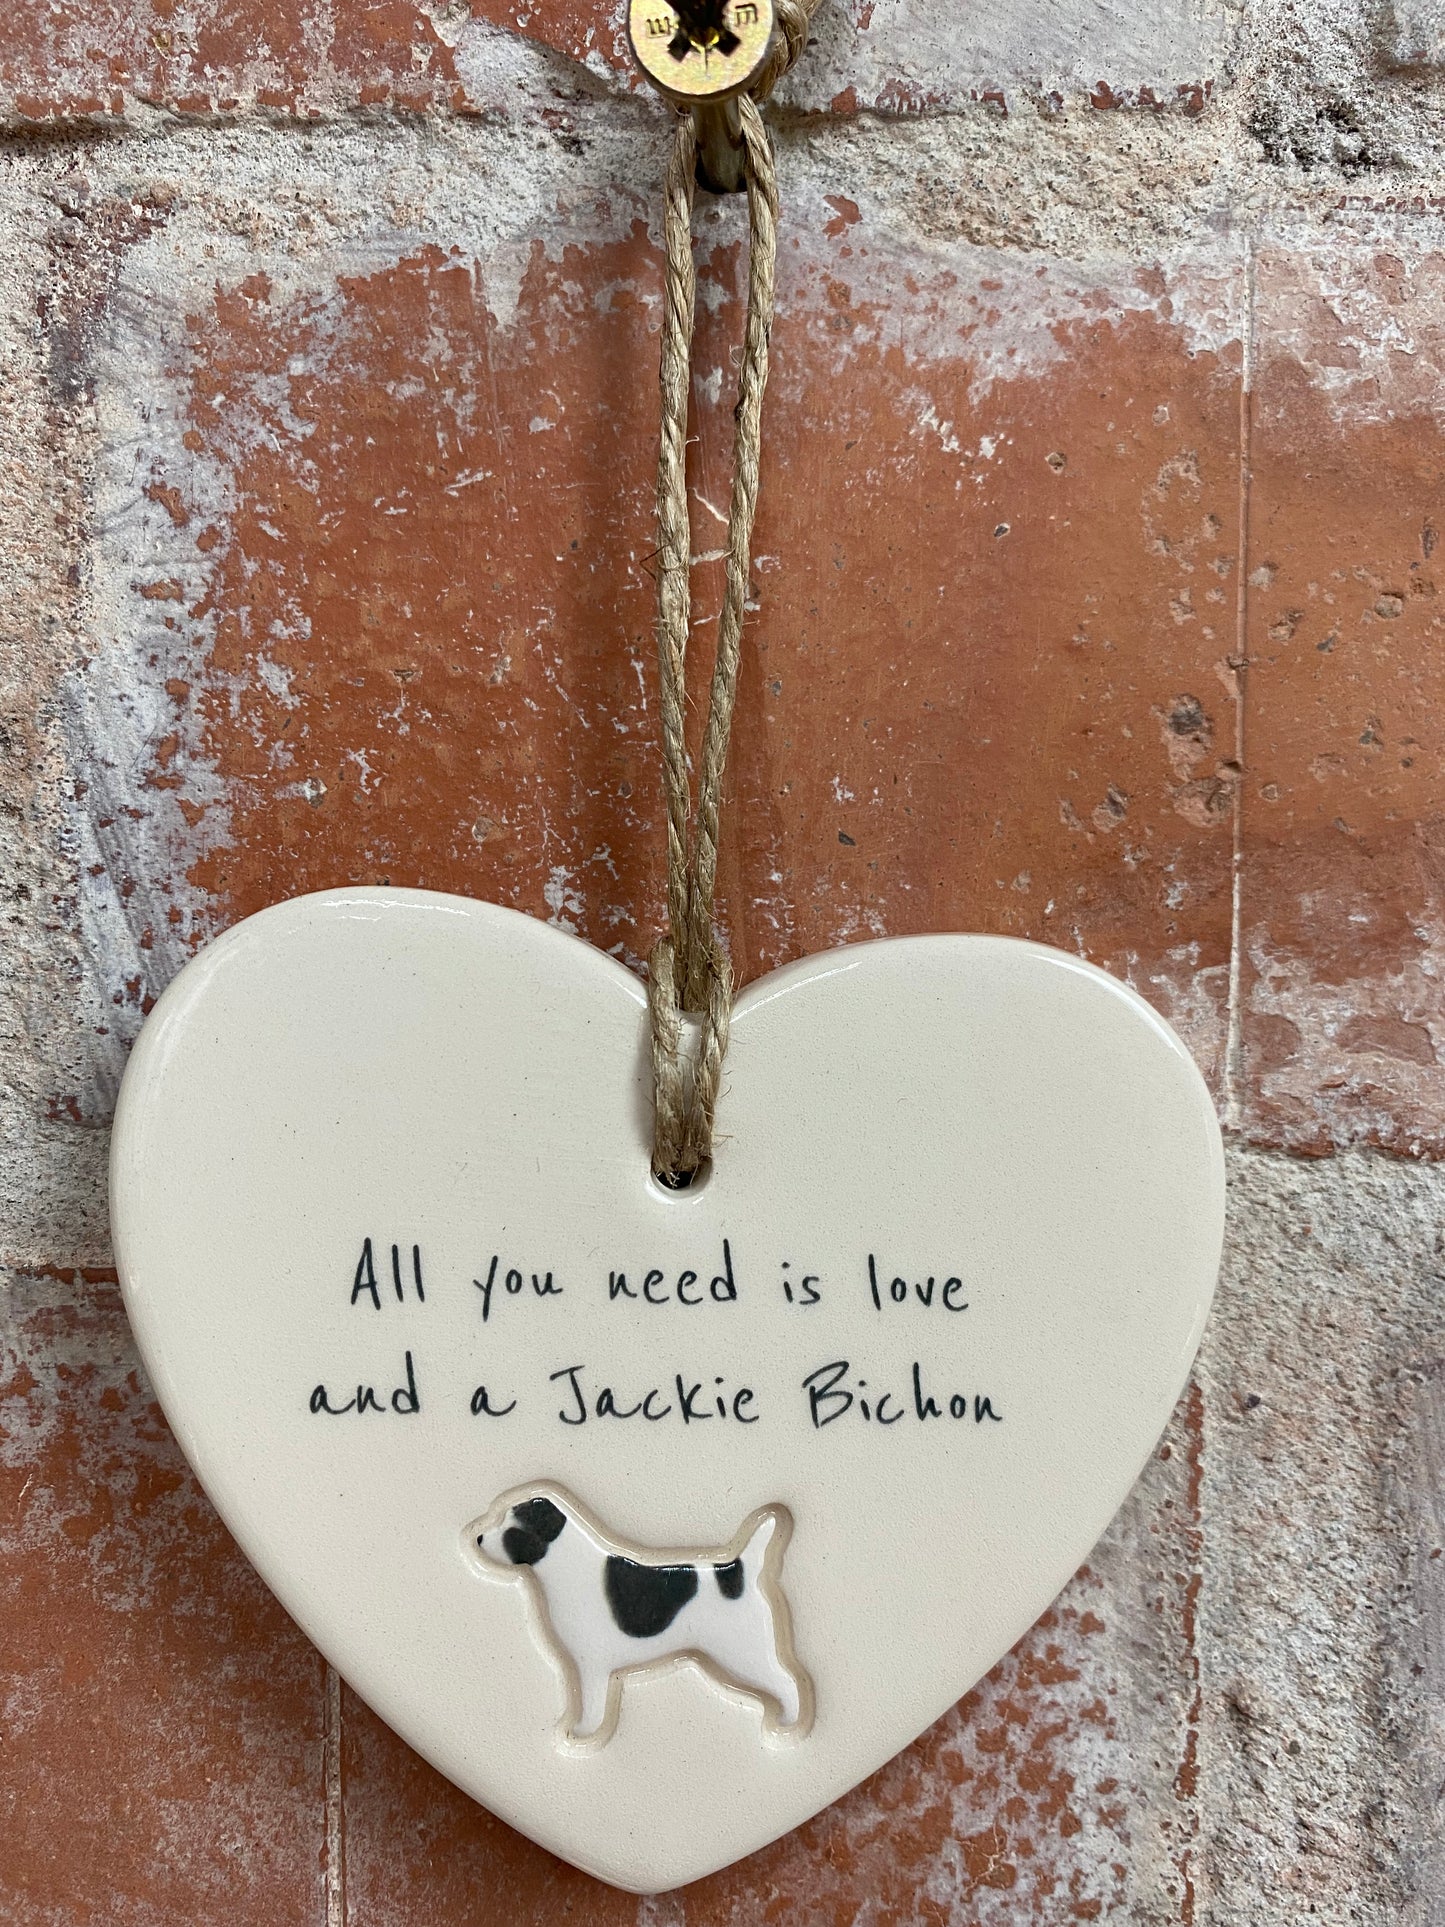 Jackie Bichon heart